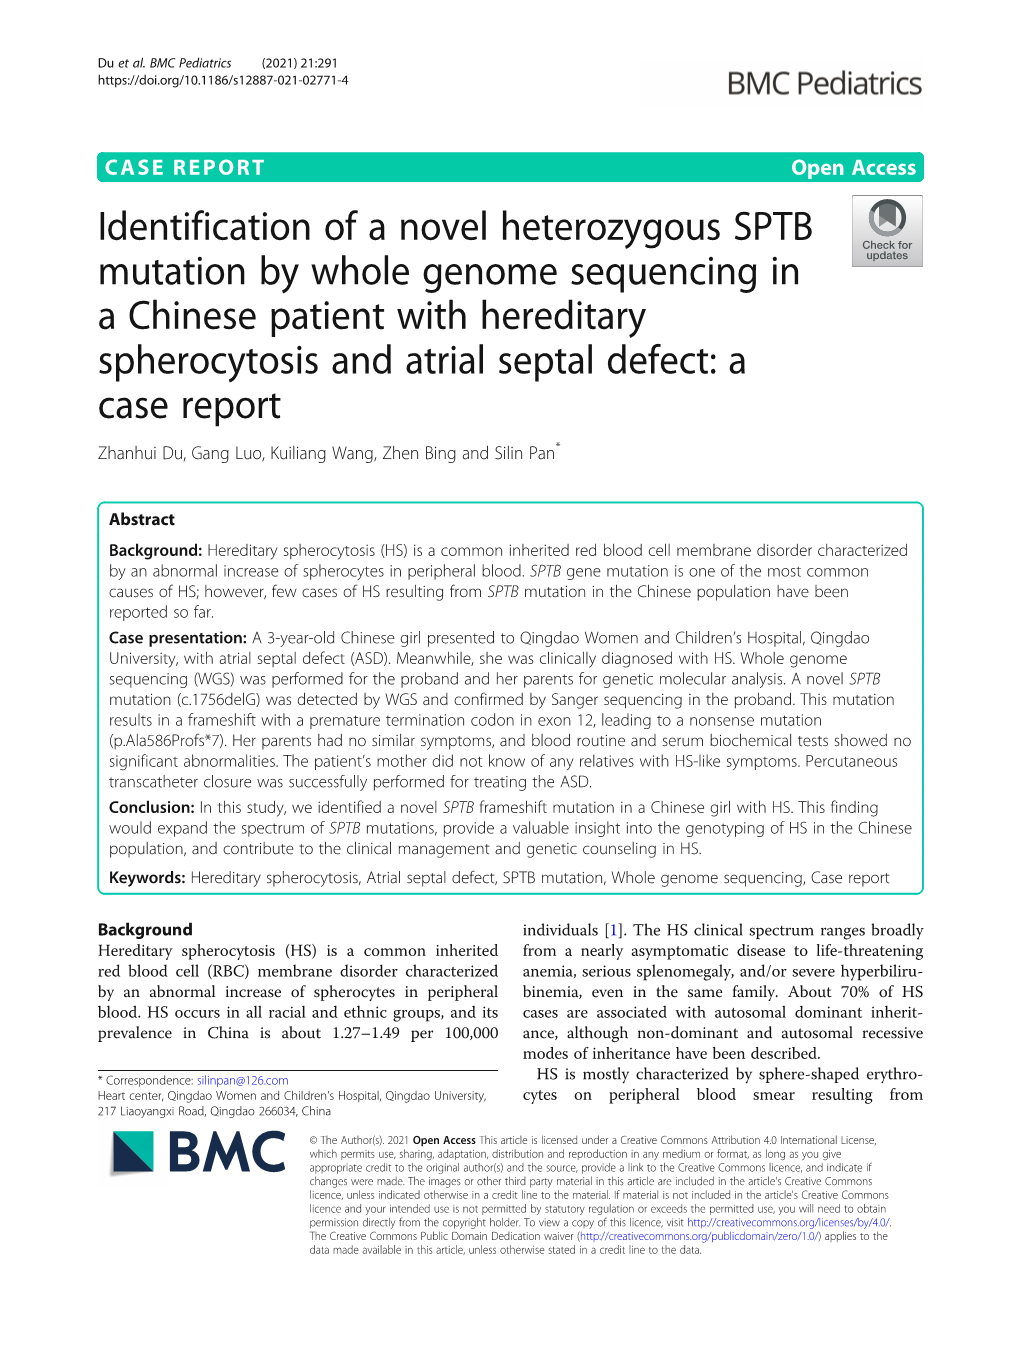 Identification of a Novel Heterozygous SPTB Mutation by Whole Genome